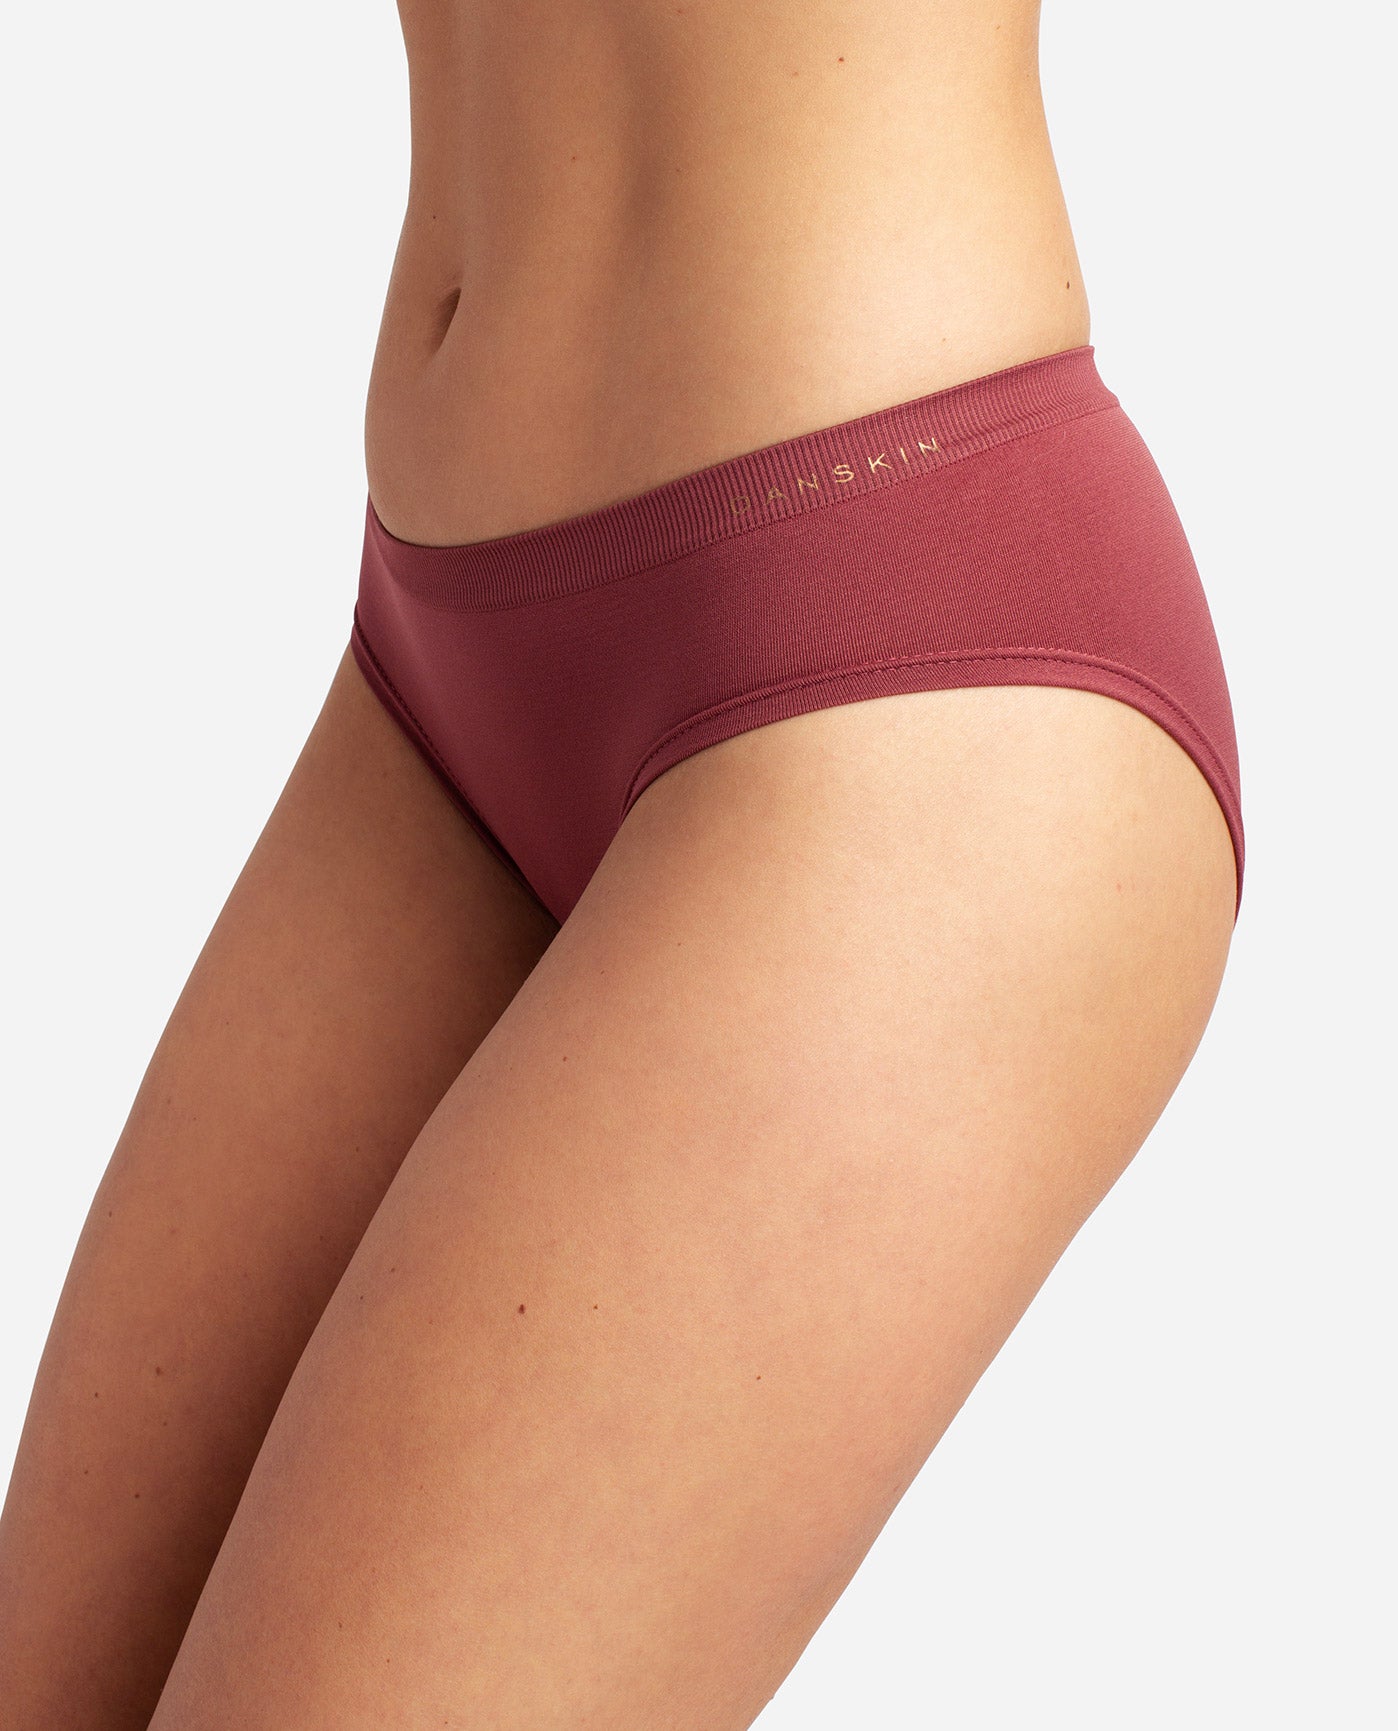 Danskin Women's Boyshort Underwear Panties Polyester Blend 5-Pair 1X for  sale online